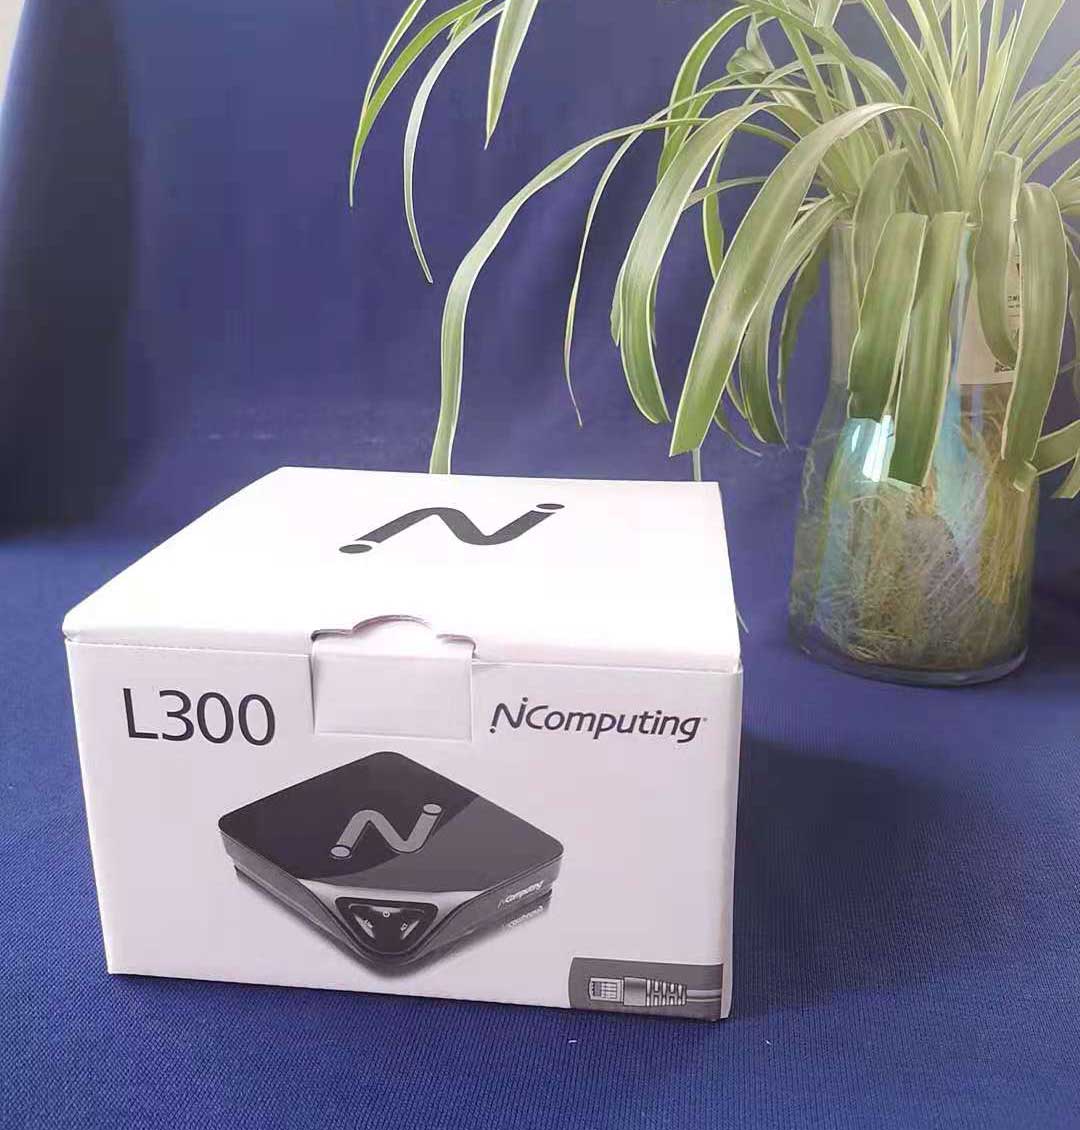 NComputing L300原装正品(新款2022)提供官方验证 - 支持最新win10版本，含永久许可证，免费提供最新版本vSpace Pro11.3LTS虚拟桌面软件，绑定设备在指定账户便于资产管理